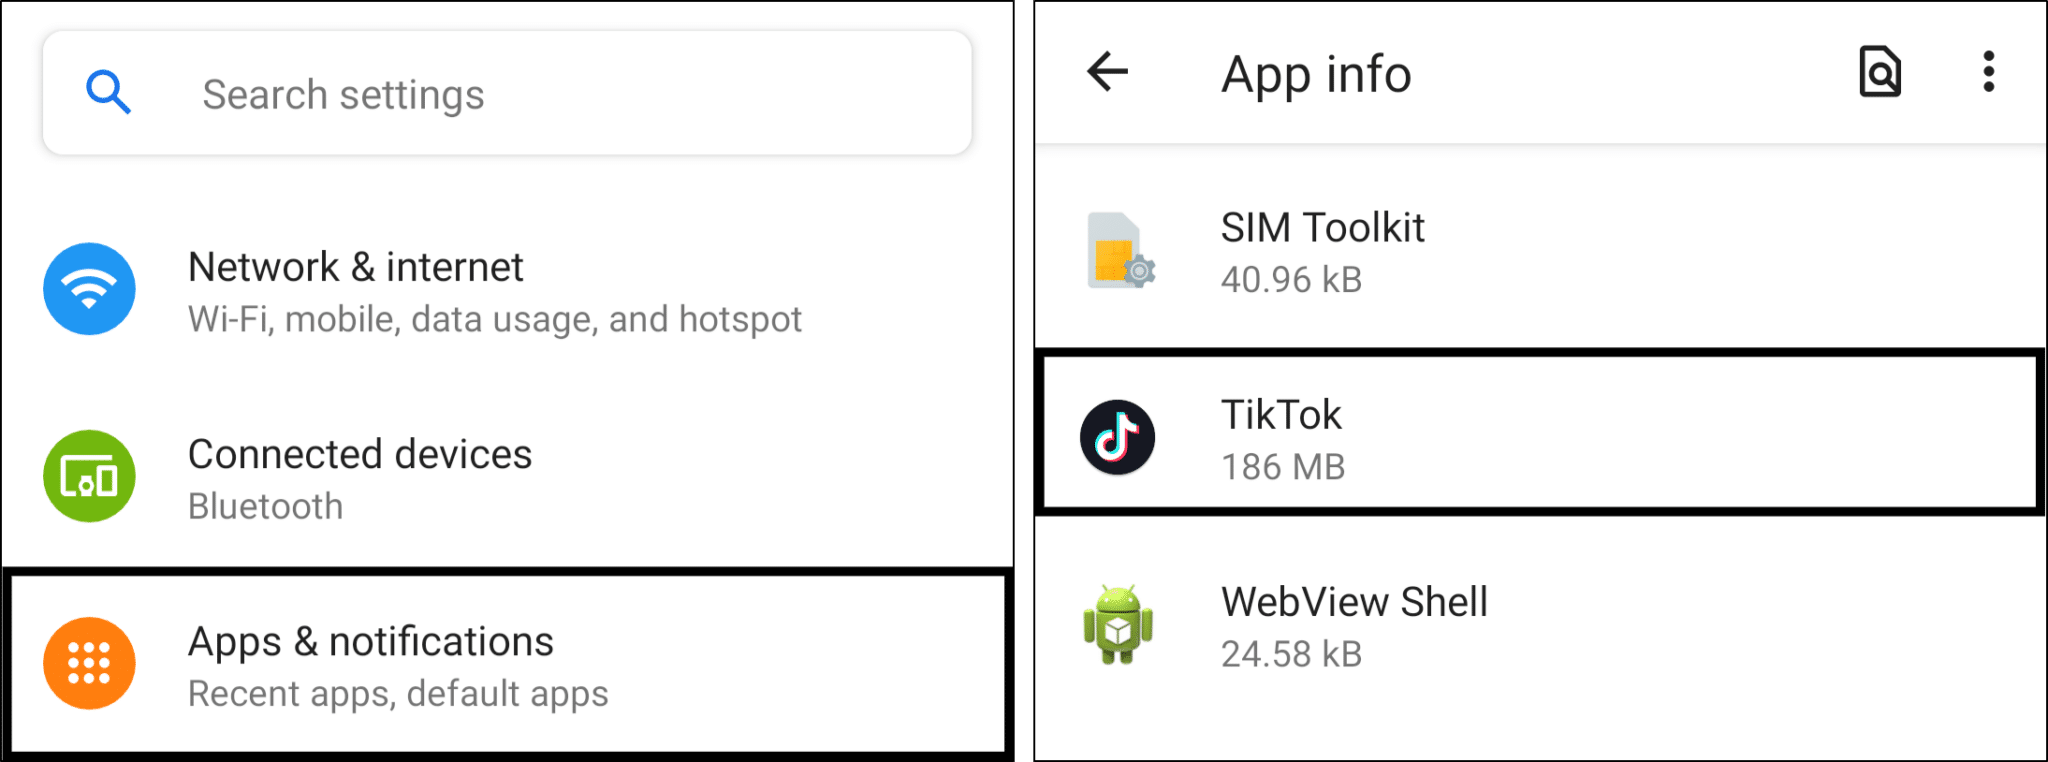 Clear TikTok app cache to fix audio issues on TikTok